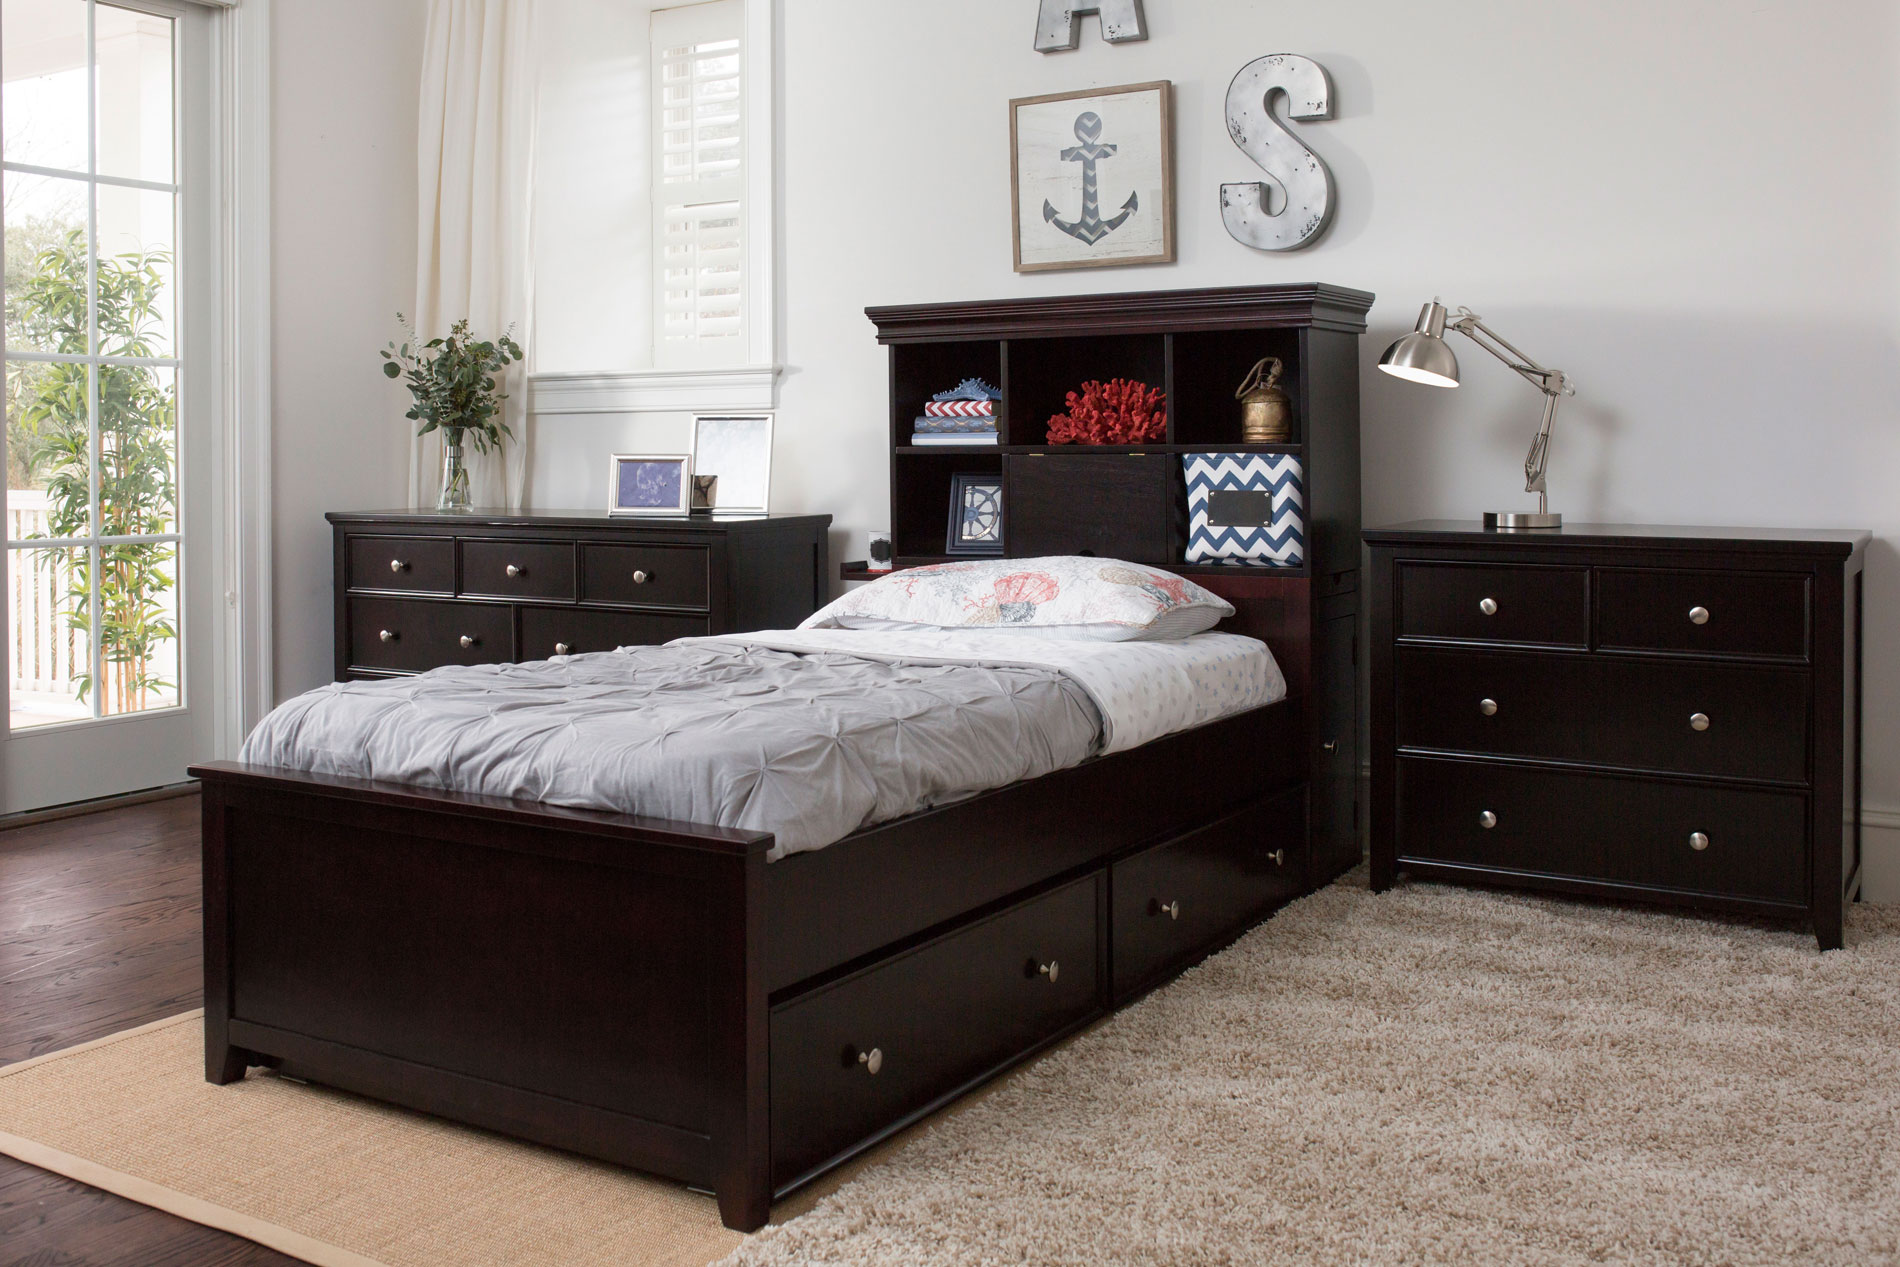 furniture for teenage bedroom